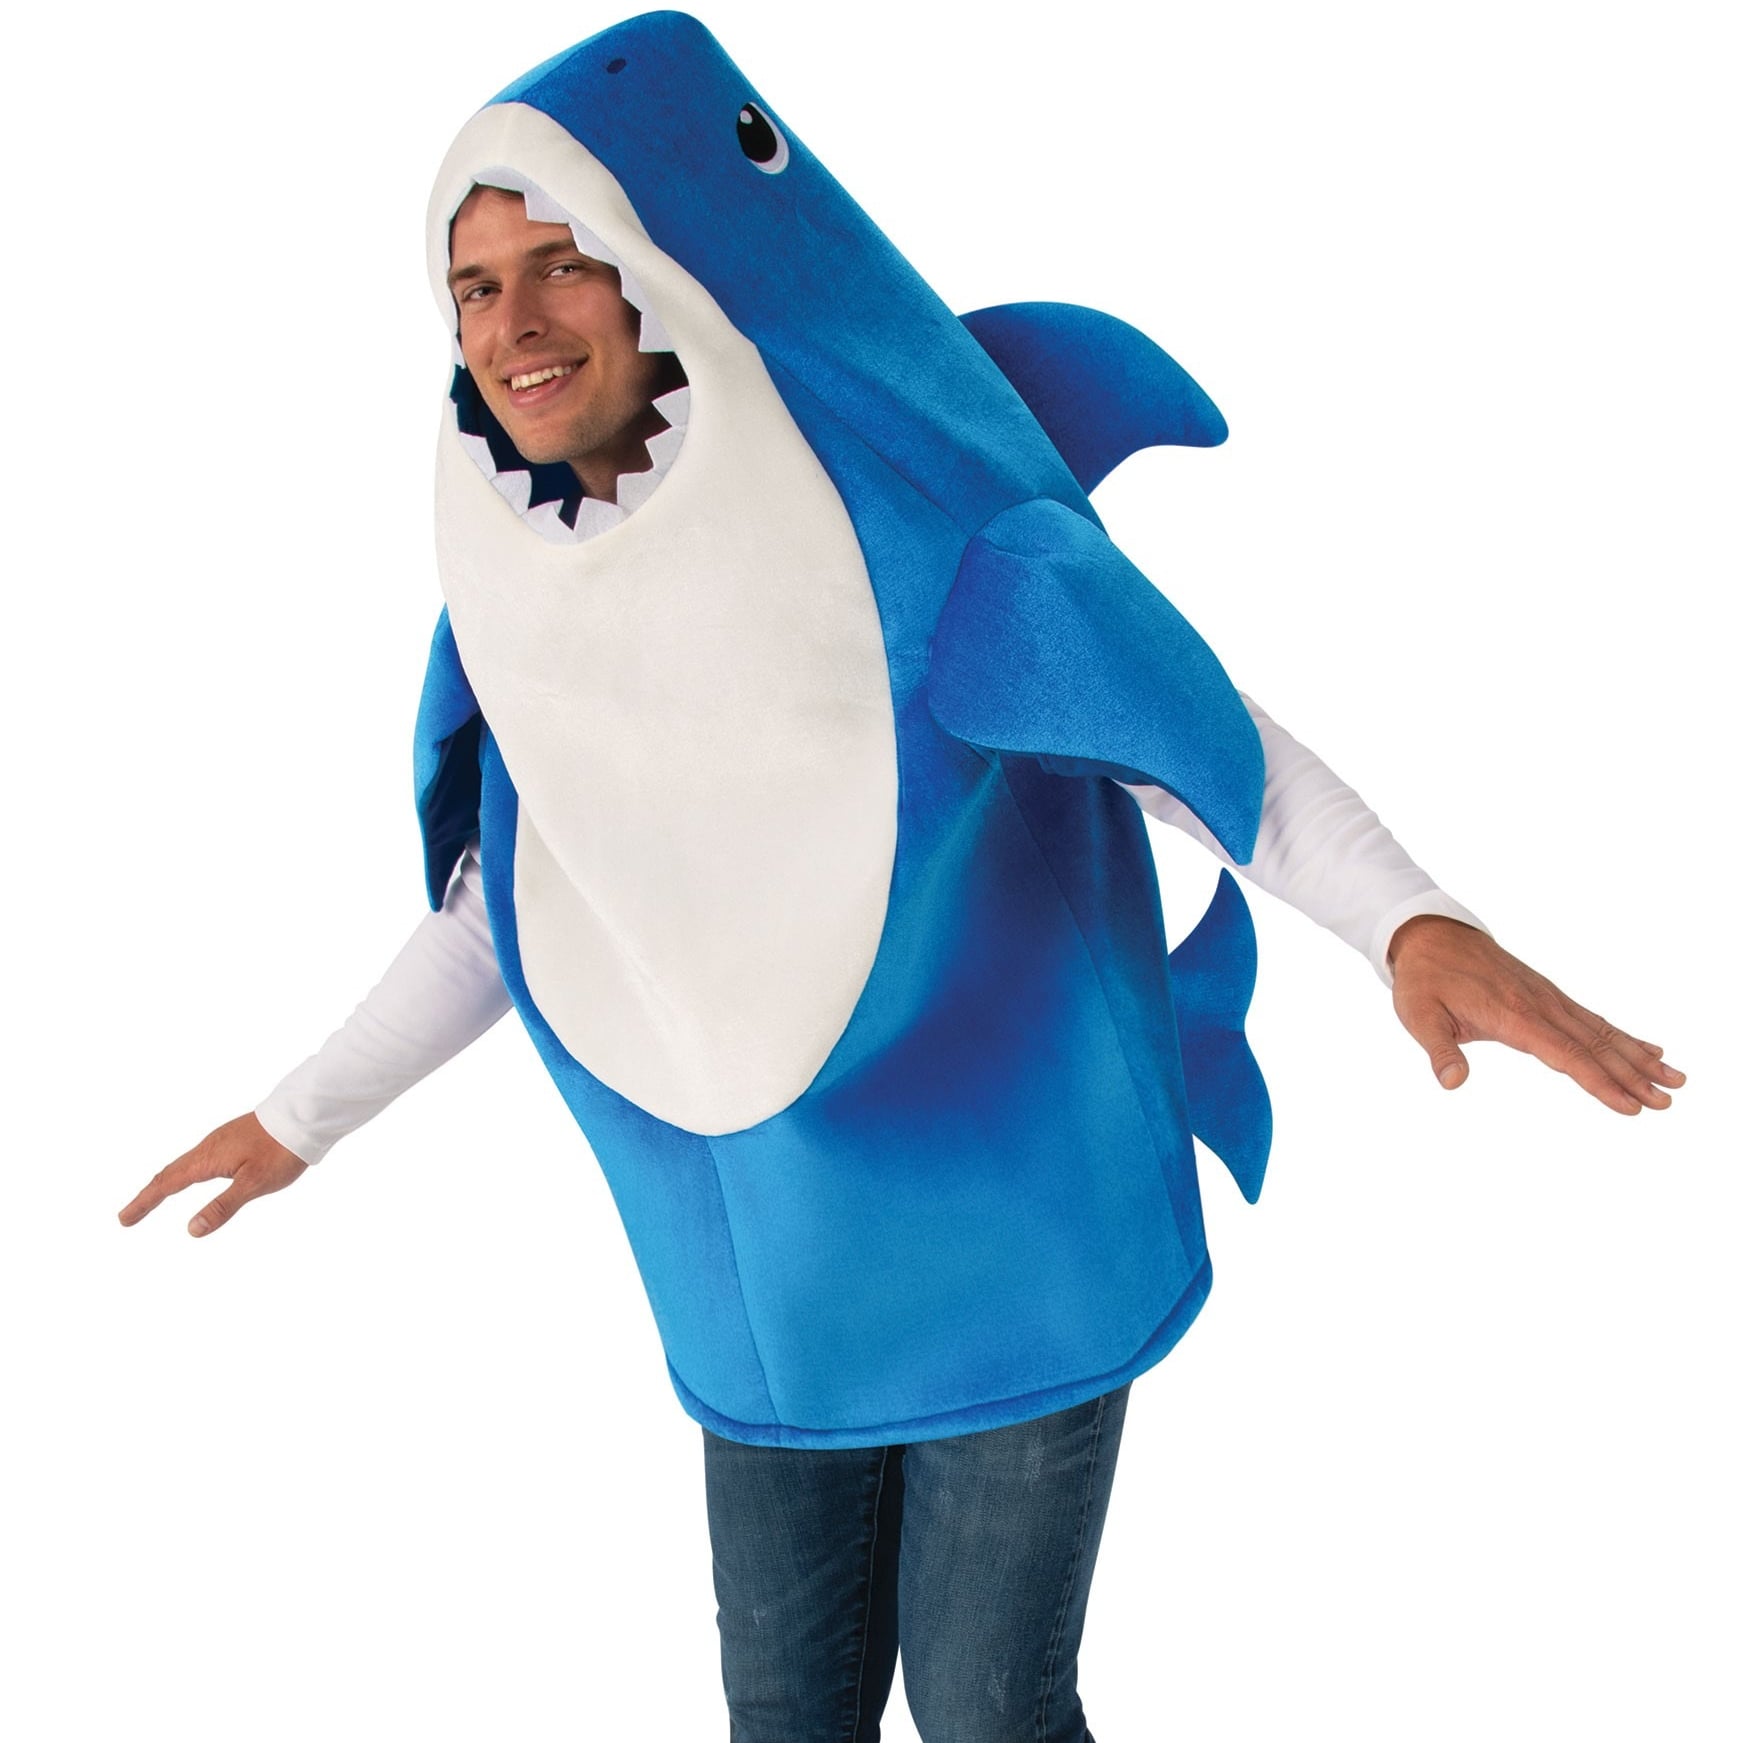 baby shark group costume